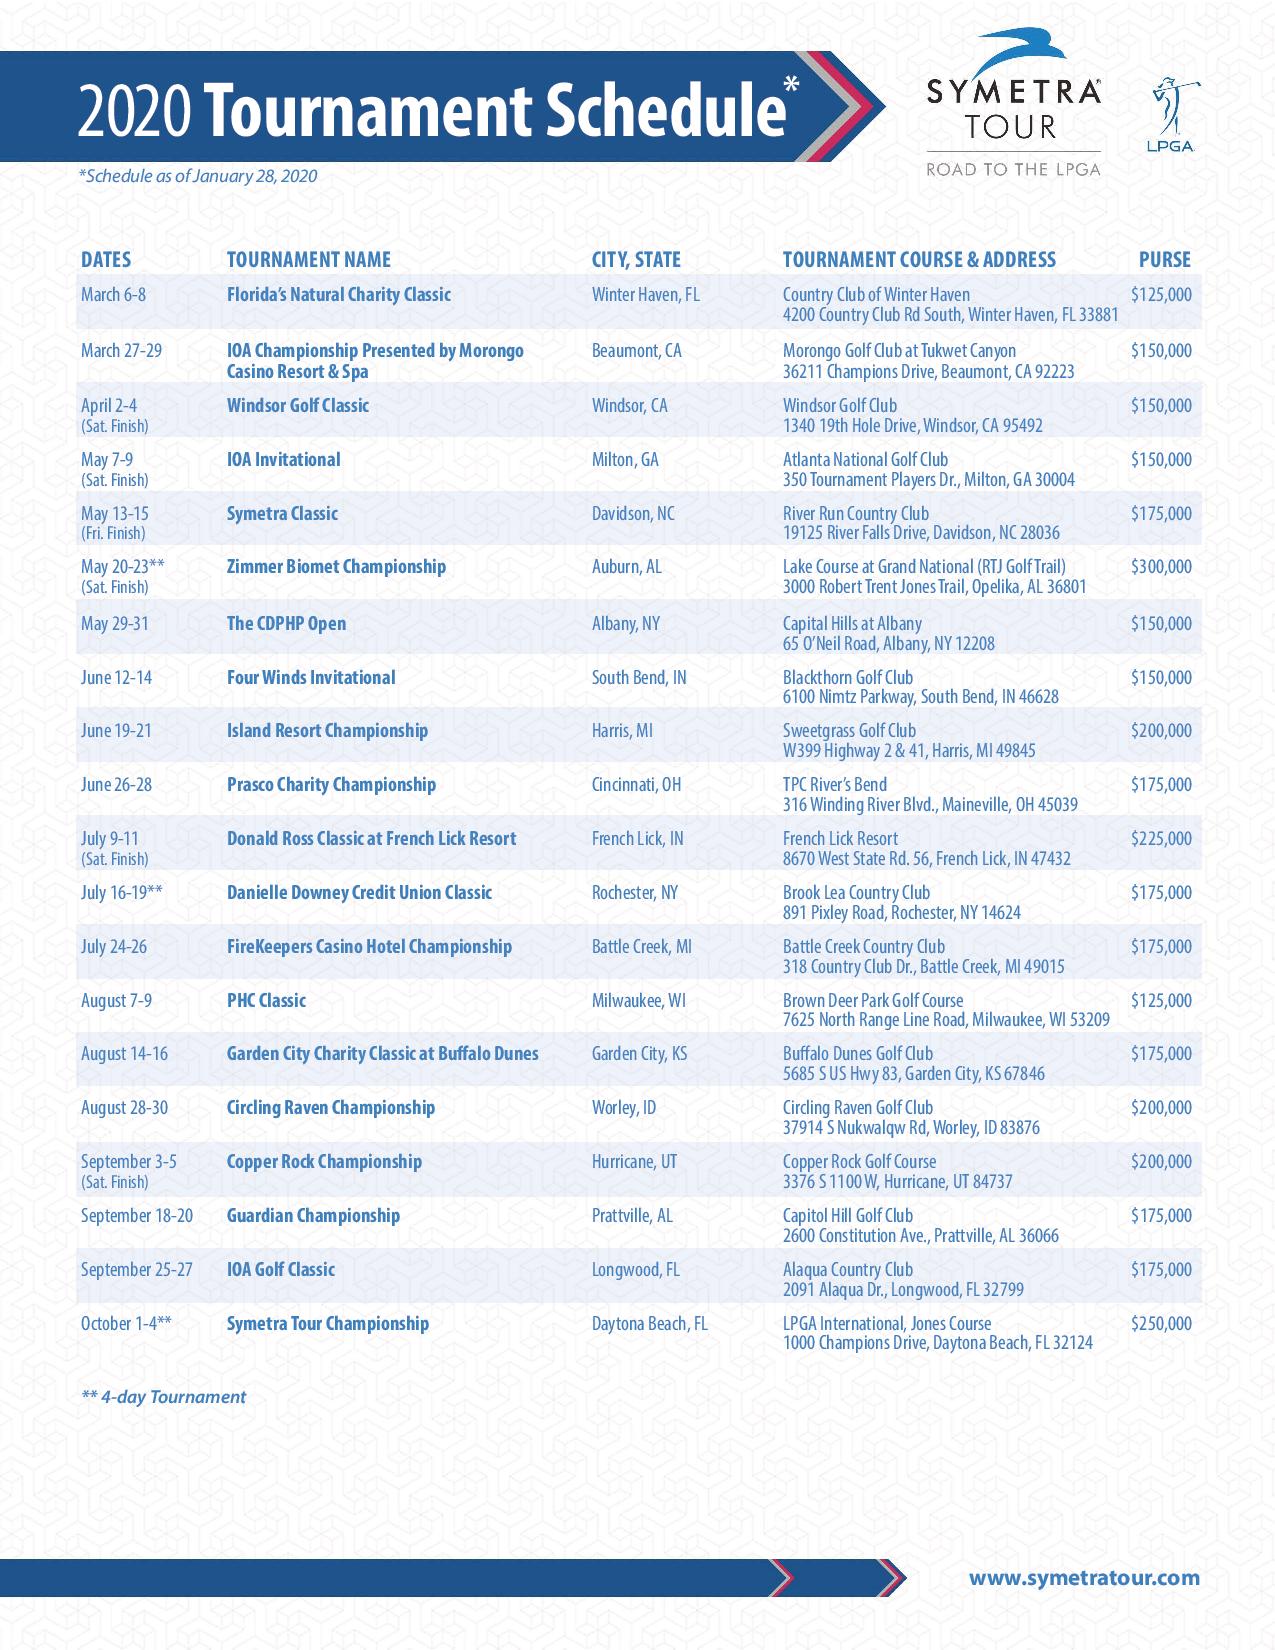 symetra tour schedule